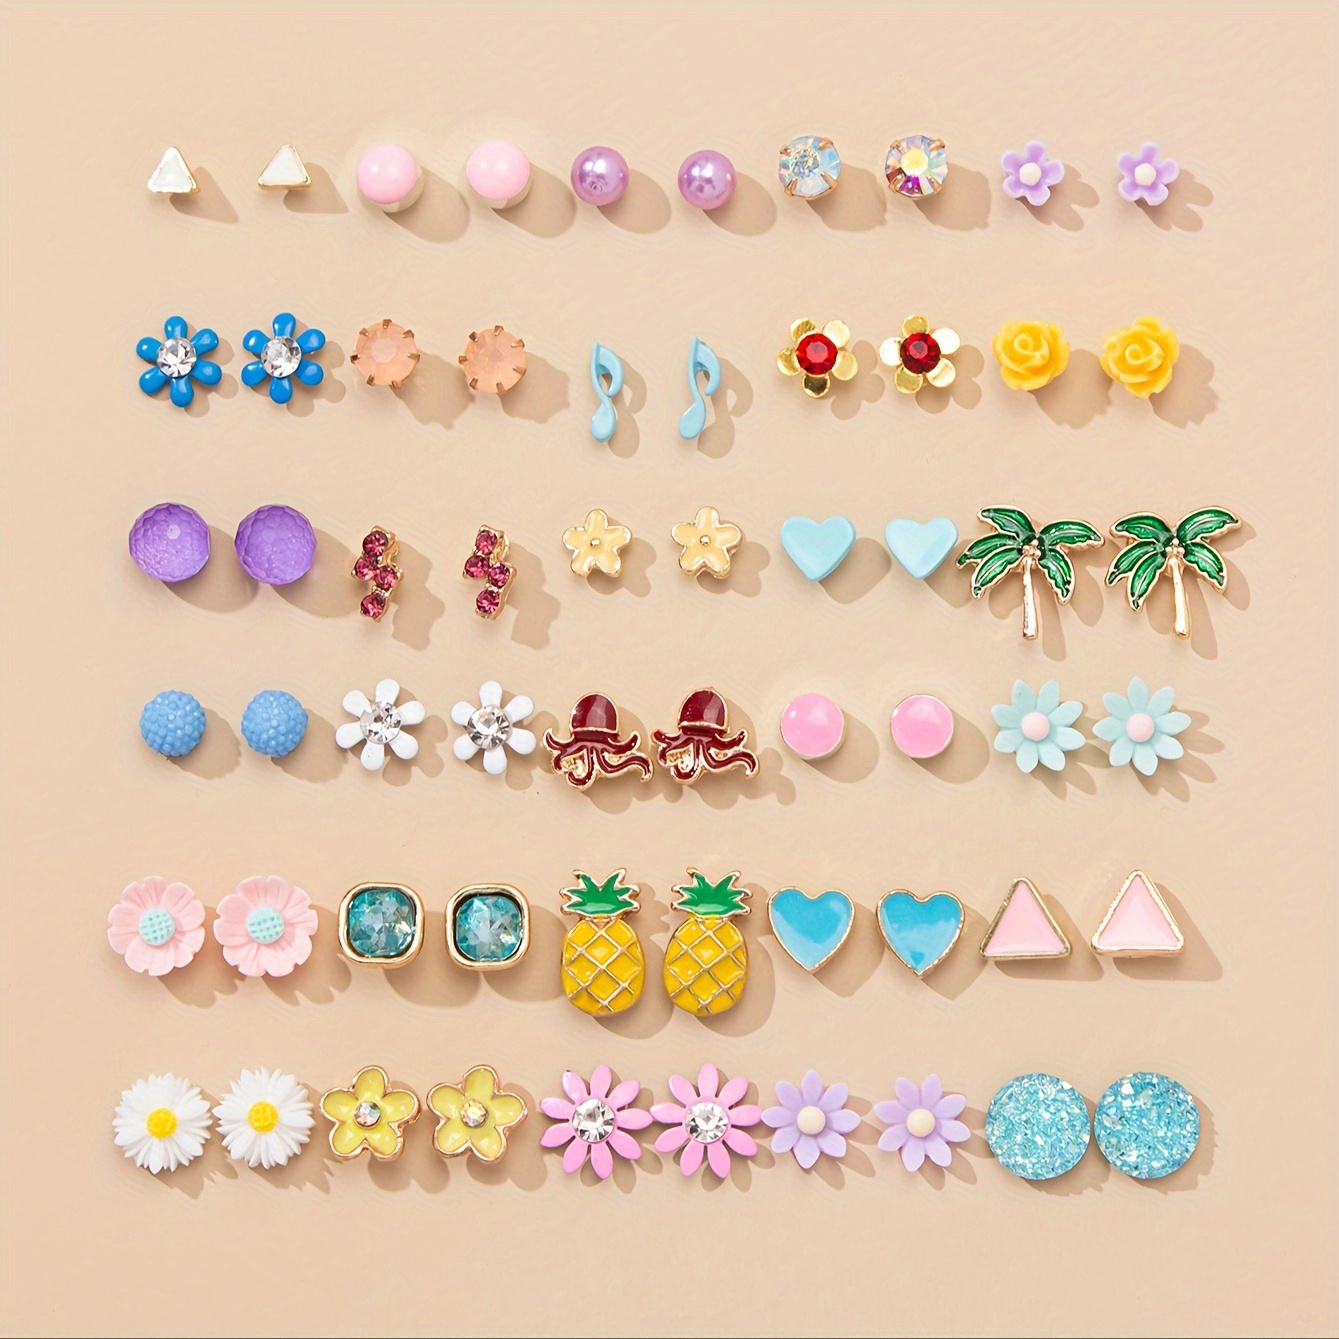 

Pretty 30 Pairs Set Of Love Flower Pineapple Design Stud Earrings Zinc Alloy Jewelry Embellished With Rhinestones Adorable Earrings